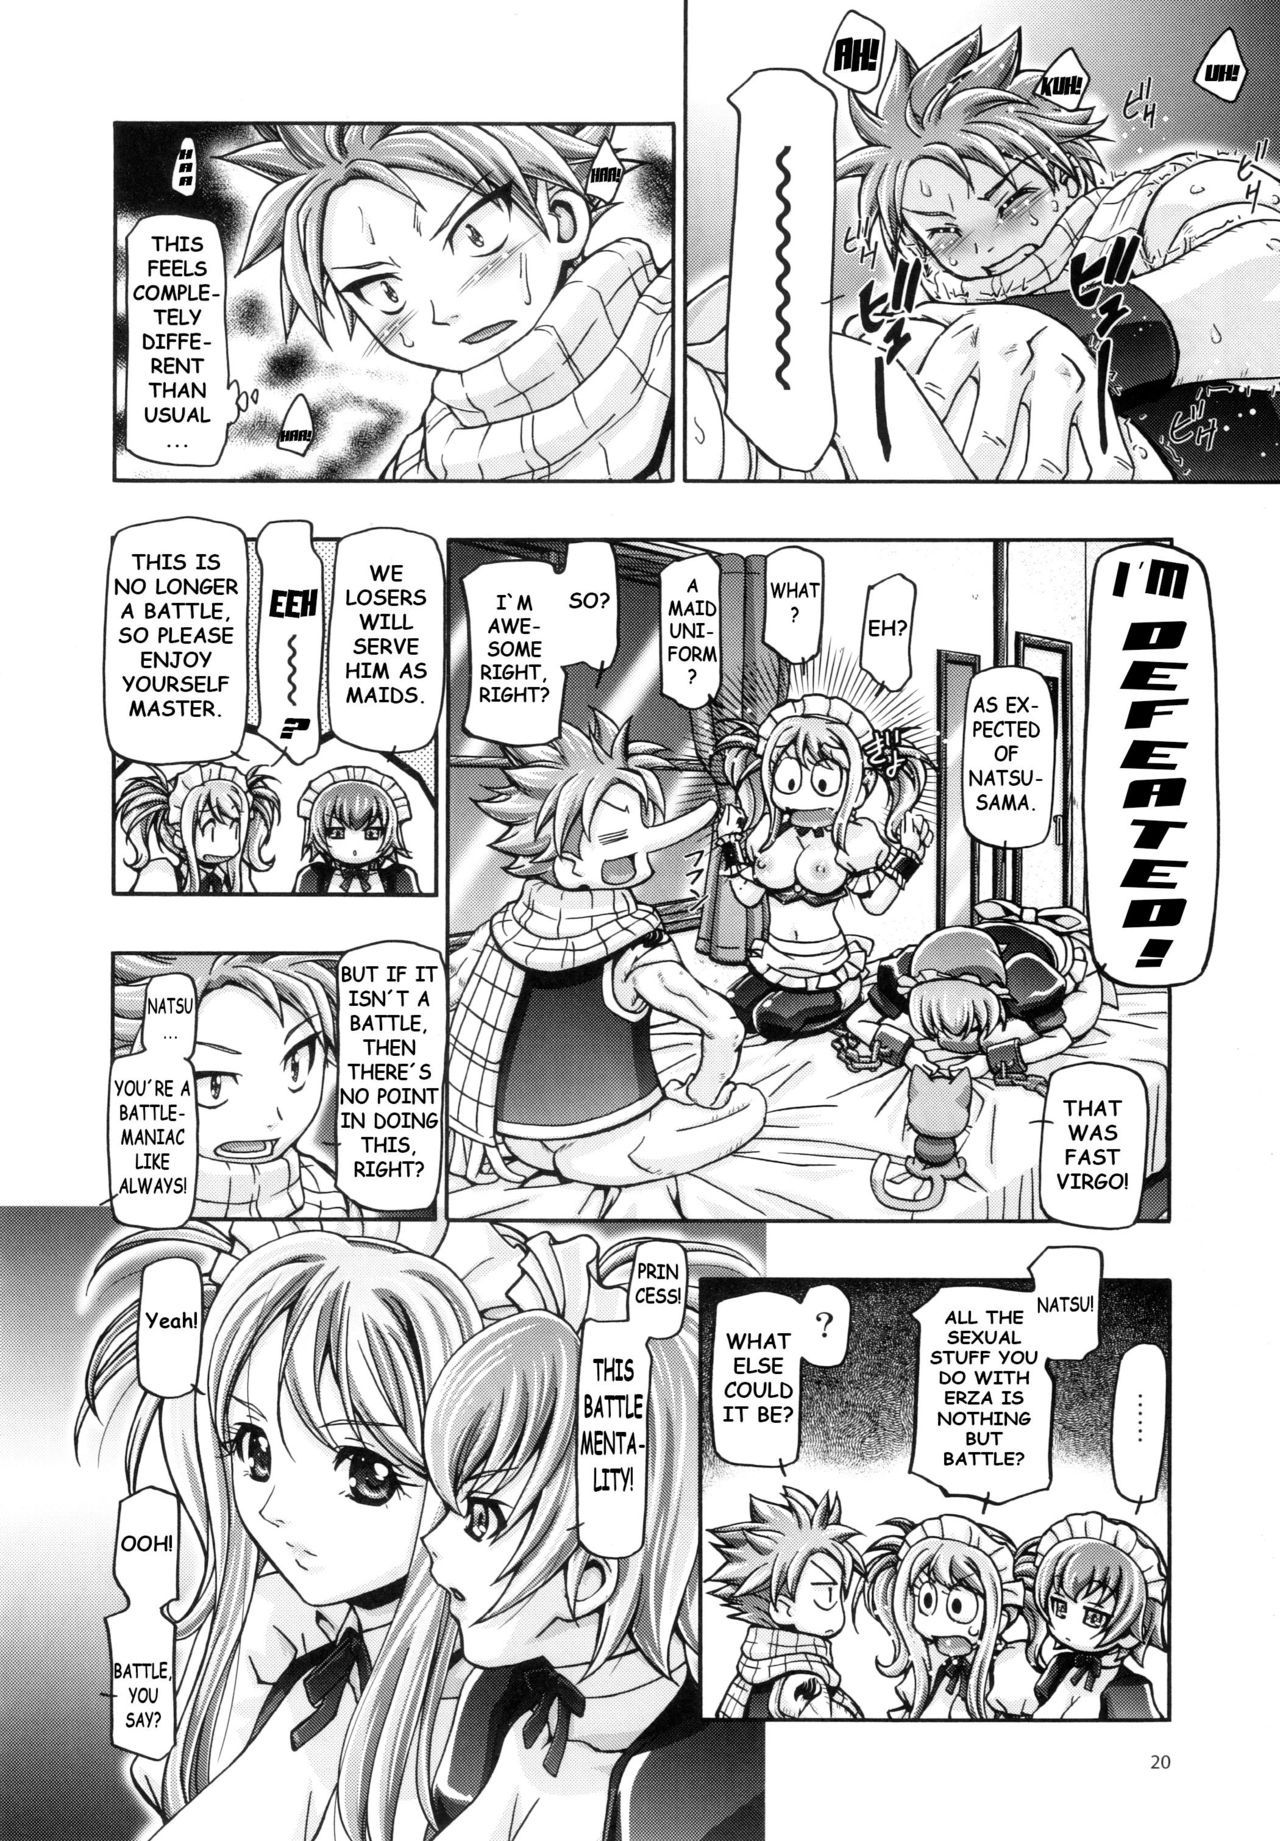 Lucy and virgos stellar performance hentai manga picture 19